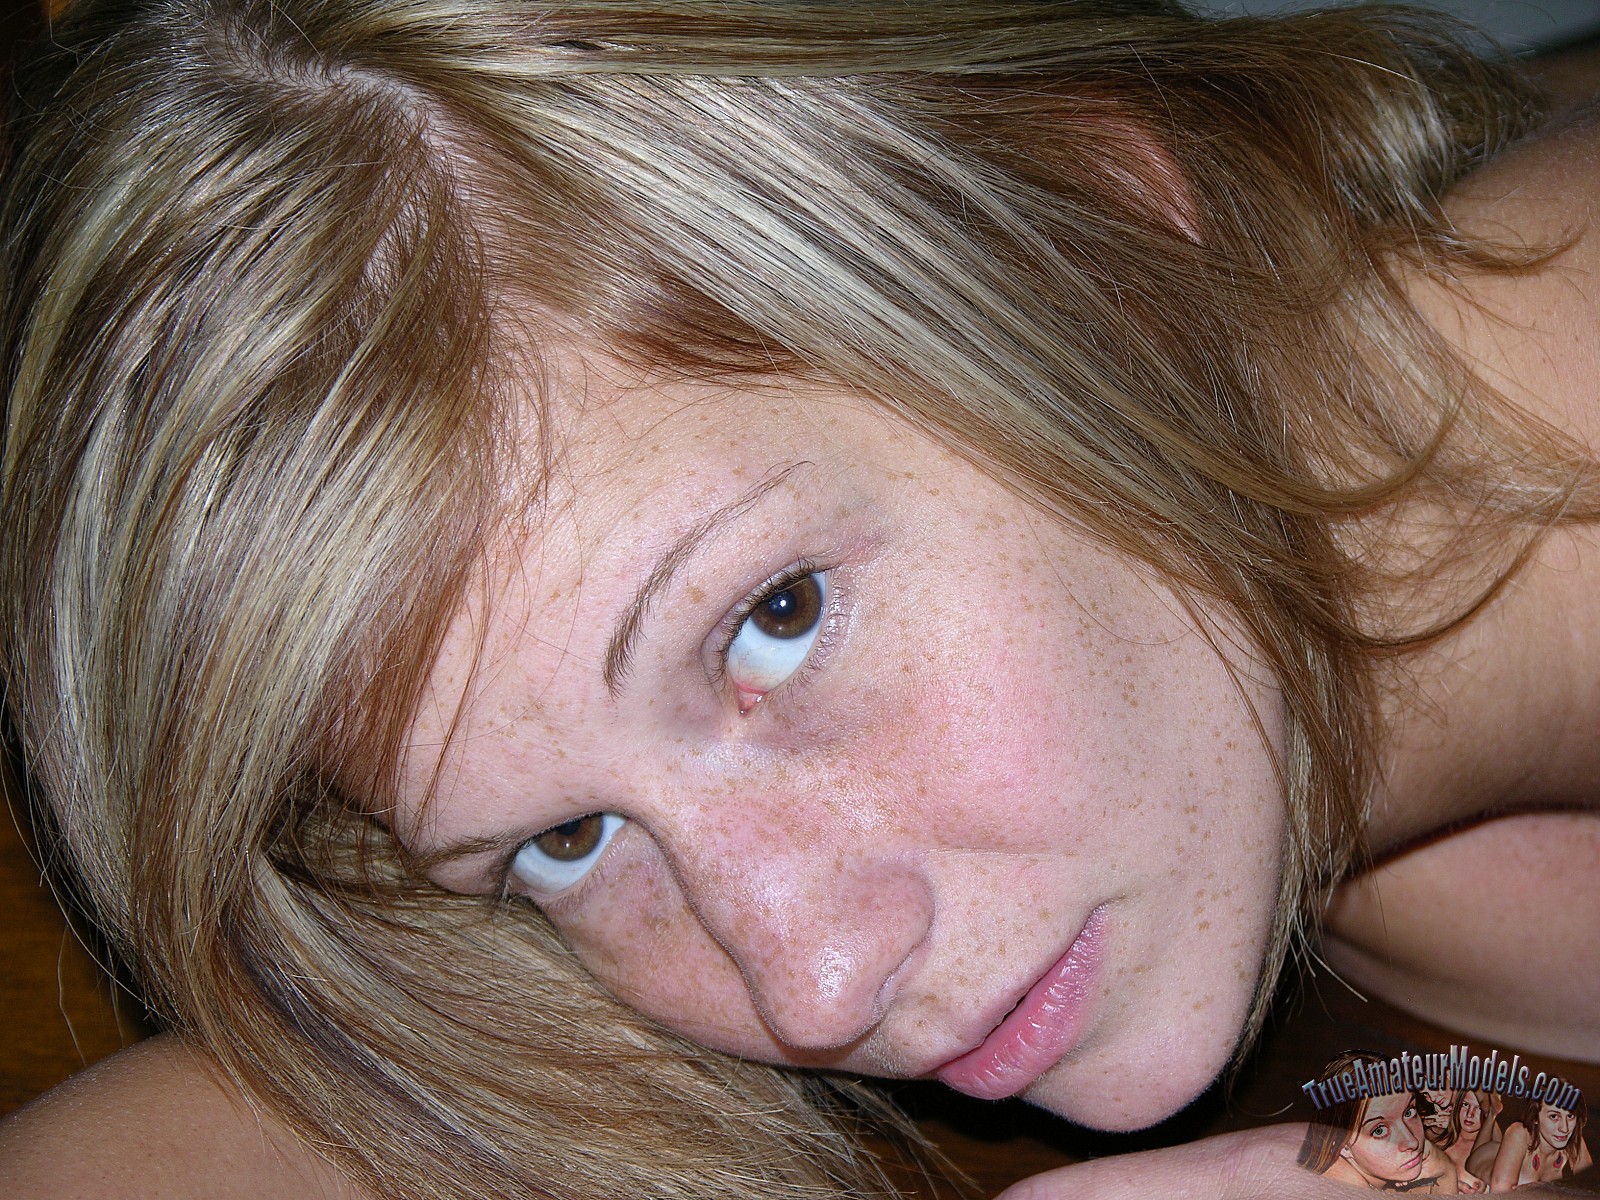 wpid-nude-blonde-with-freckles10.jpg